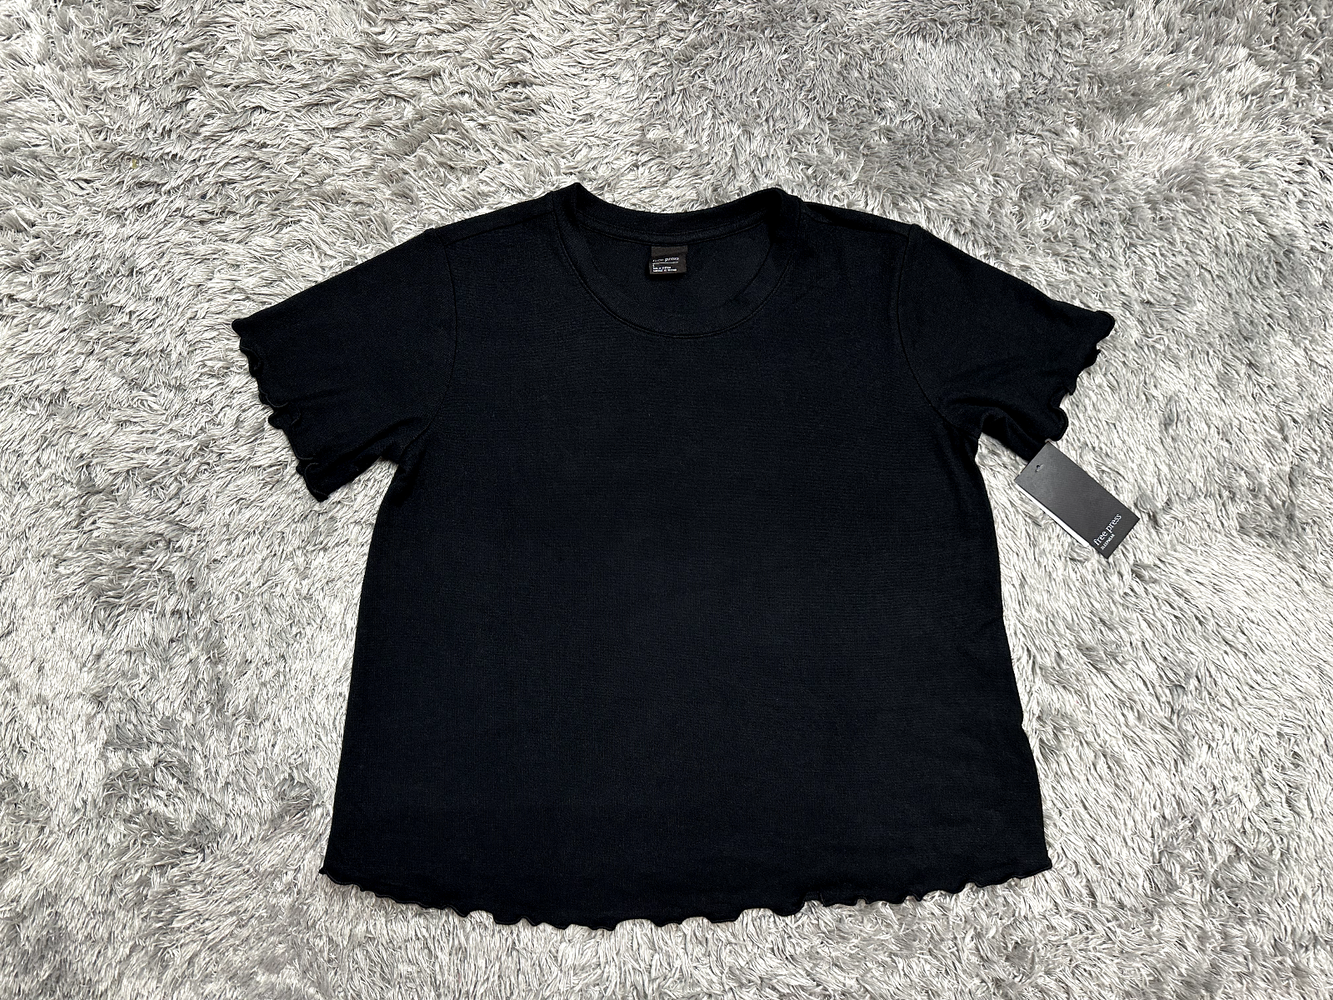 Free Press T-Shirt Blouse Women's Size Small Black Short Sleeve Sleepwear NWT!